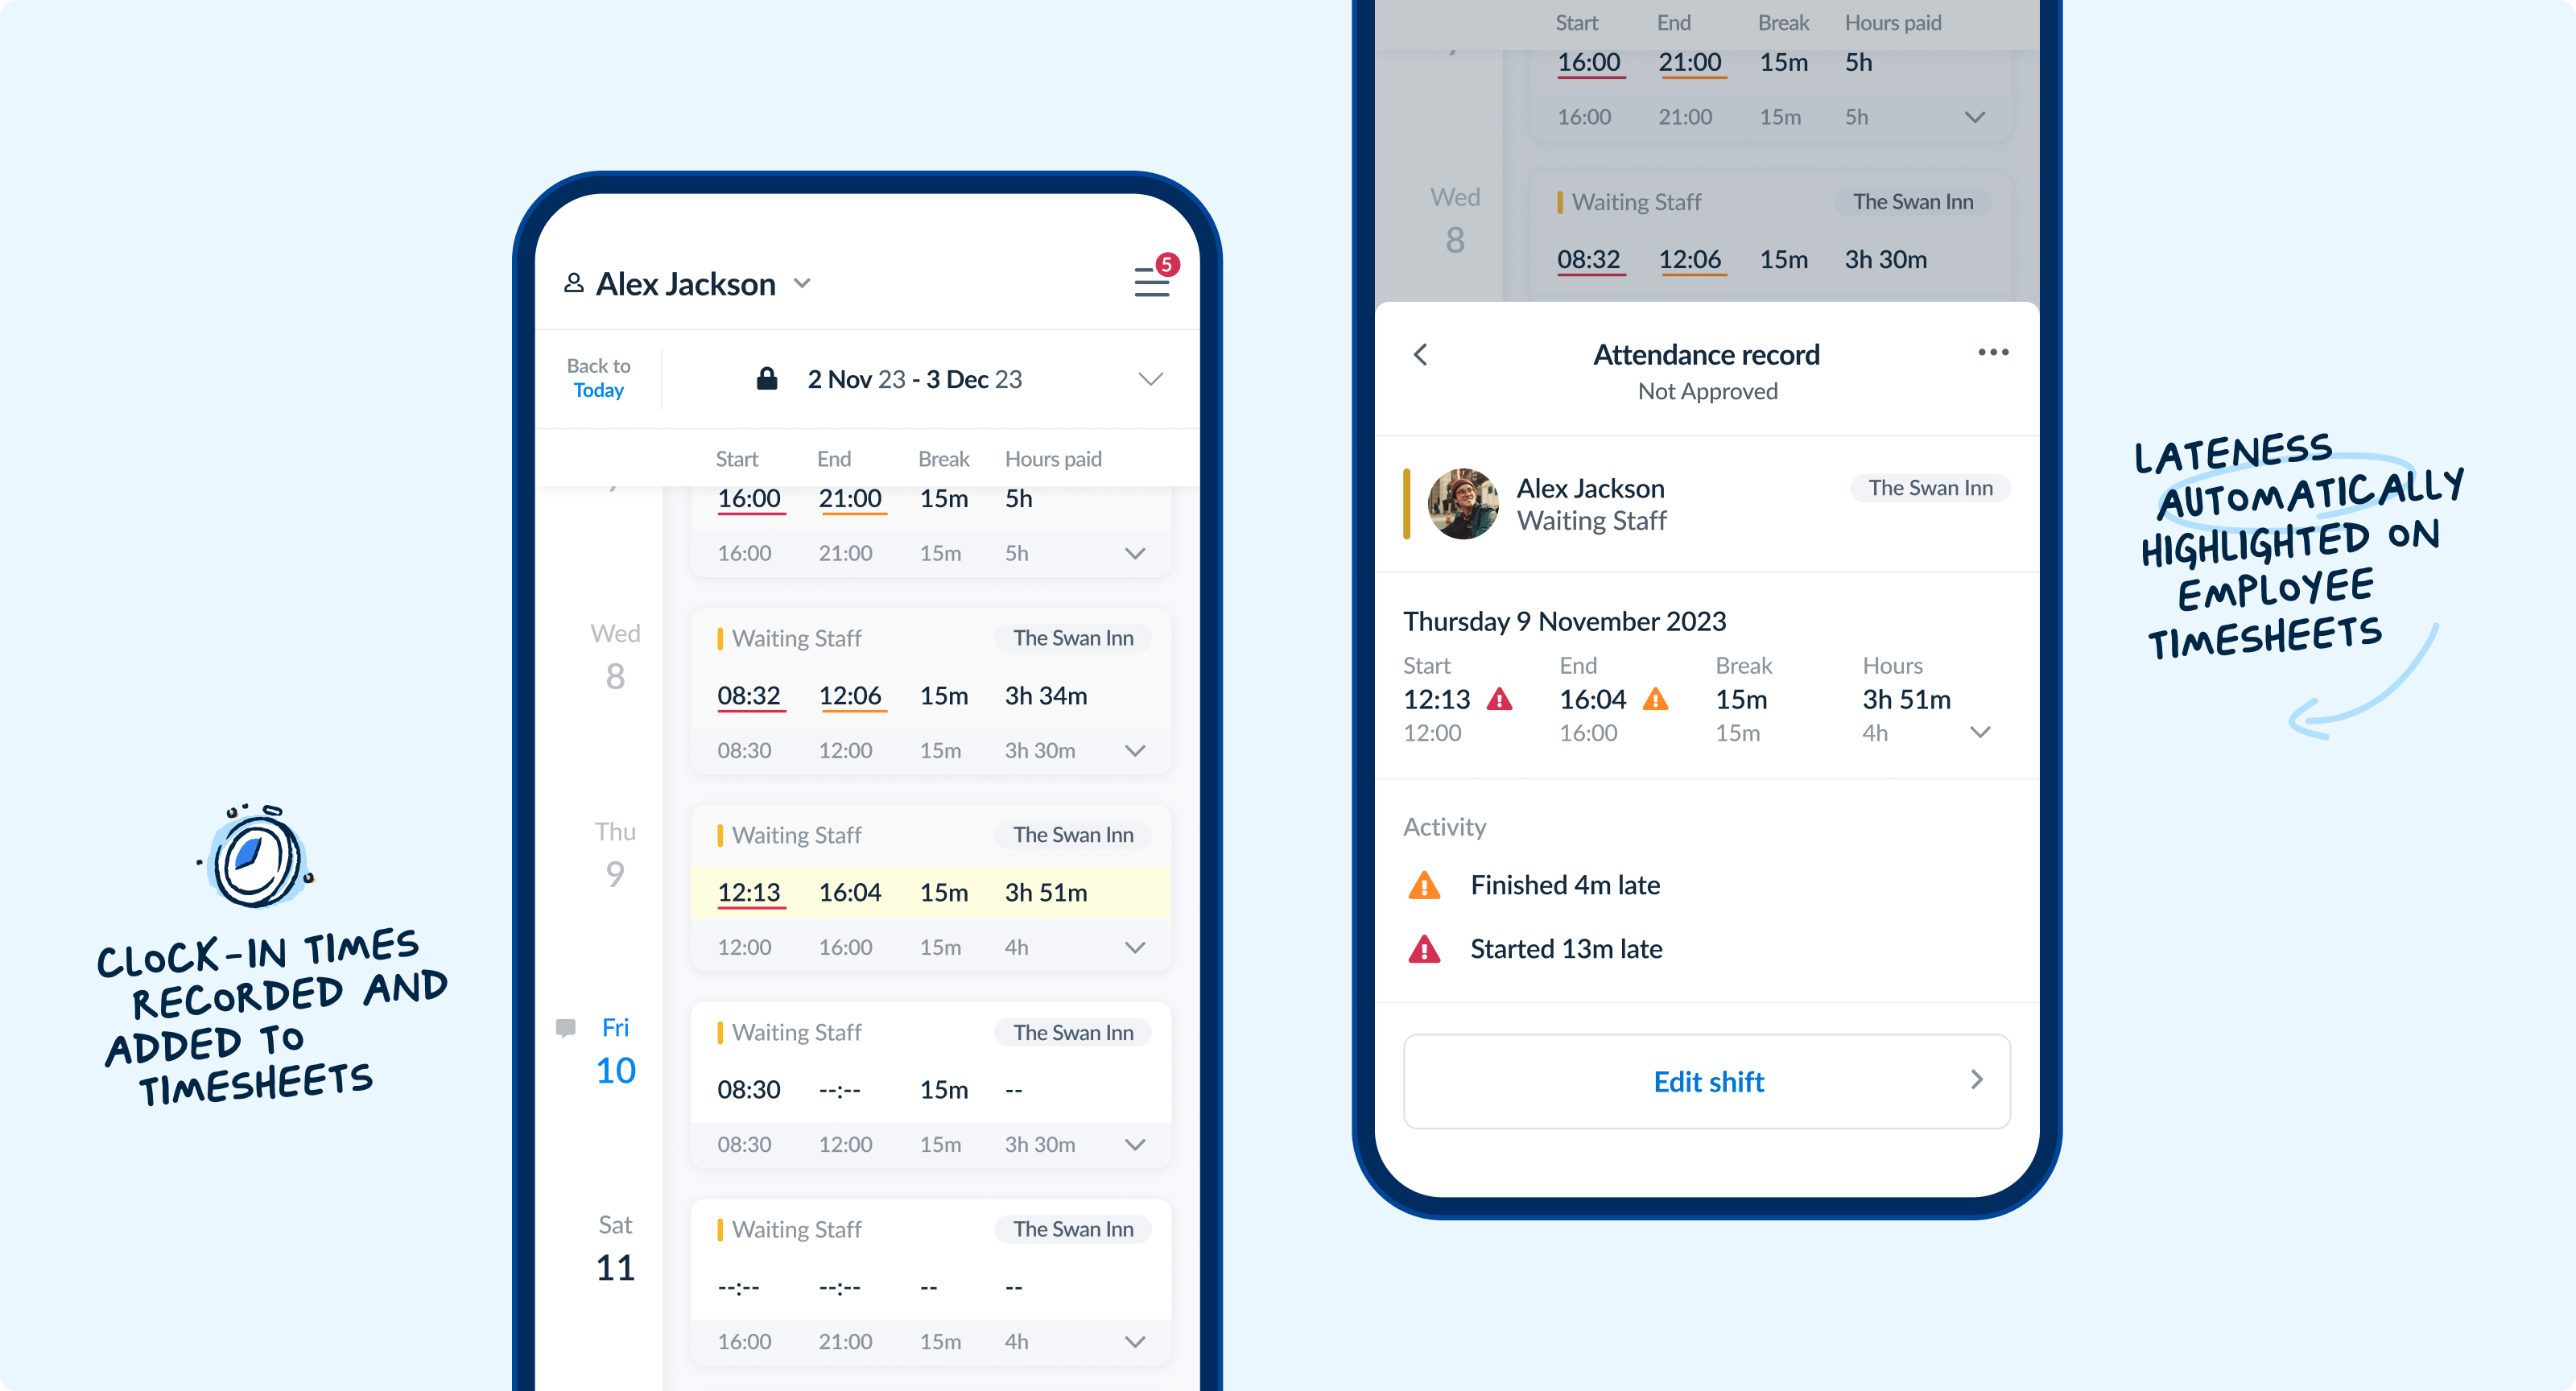 Screenshots of an example employee timesheet in the RotaCloud mobile app.